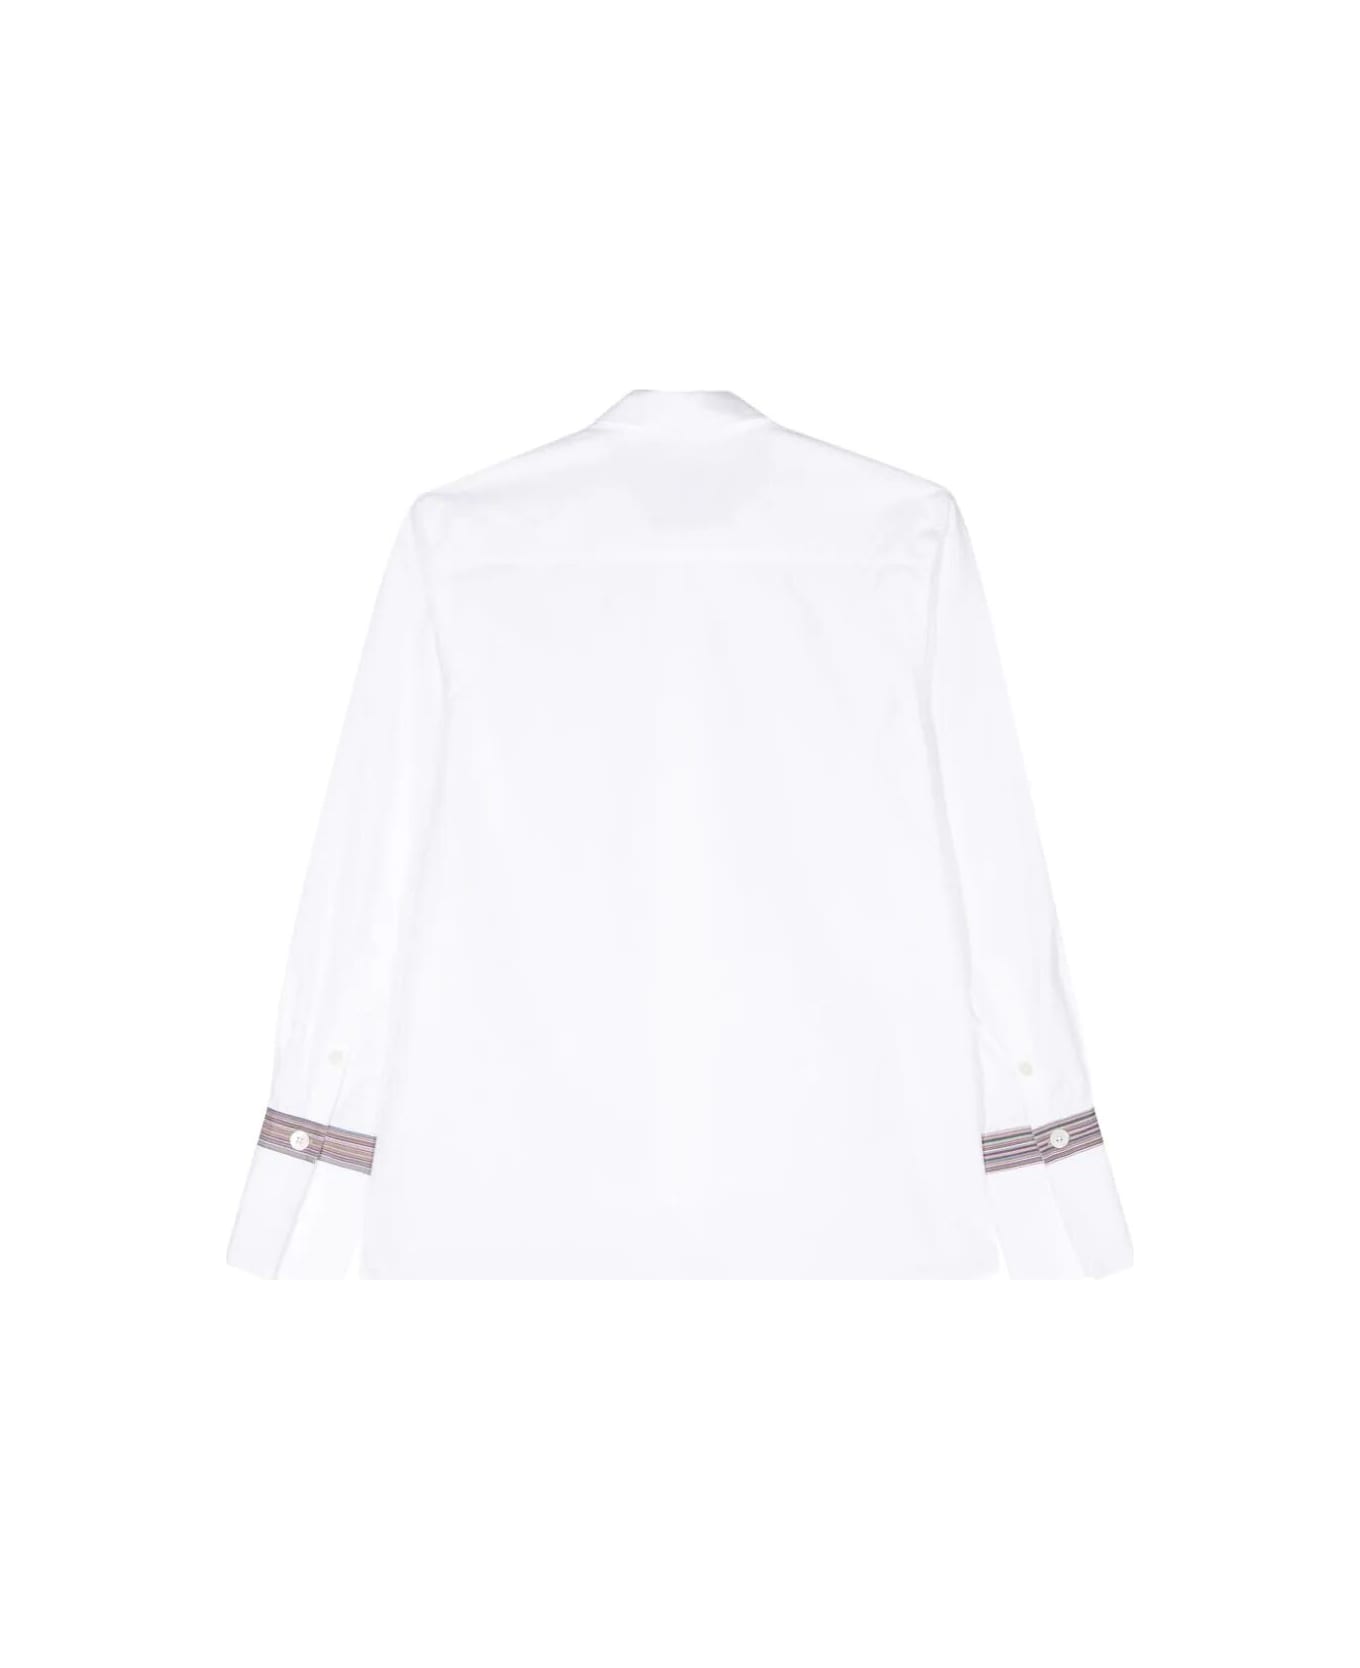 Paul Smith Classic Shirt - White シャツ